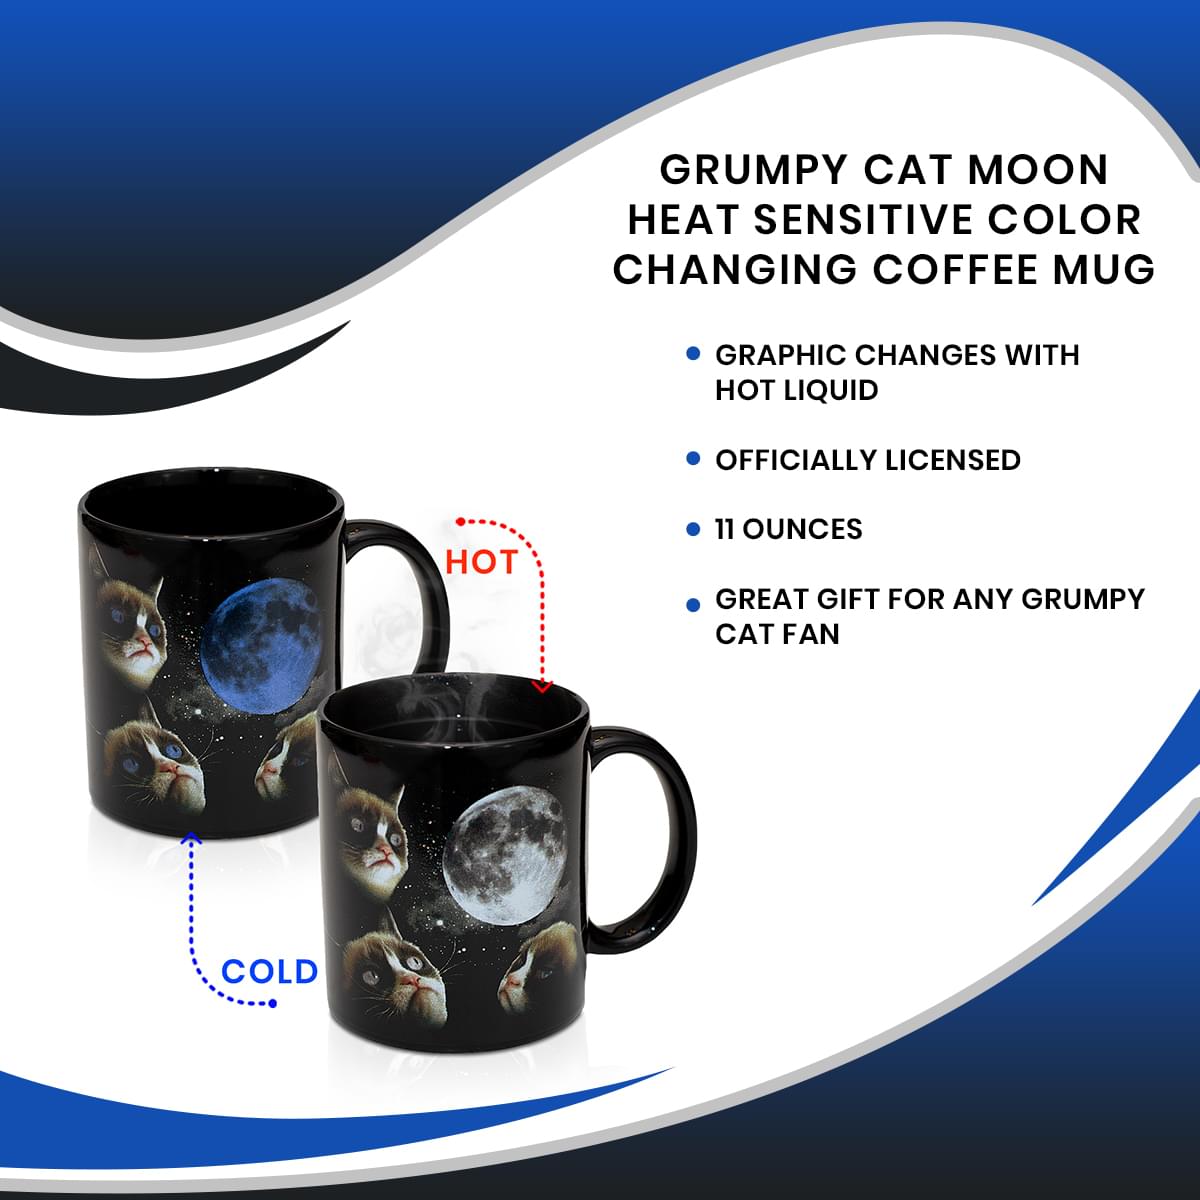 Grumpy Cat Moon Heat Sensitive Color Changing Coffee Mug